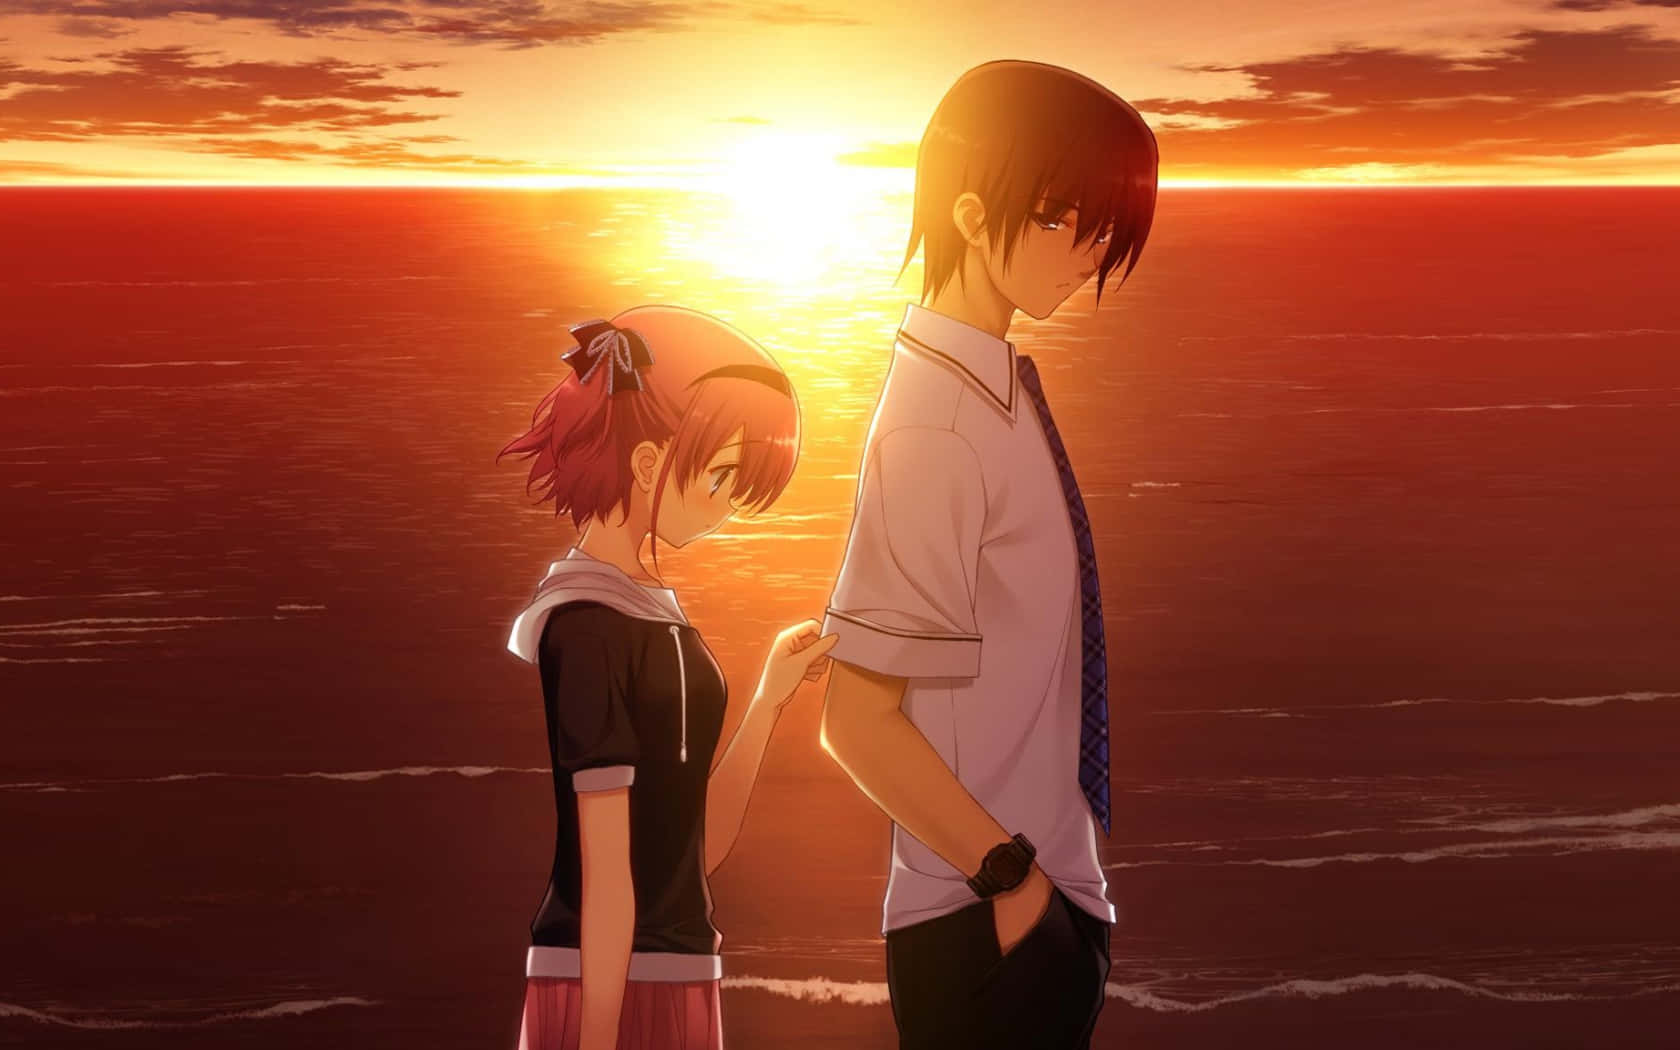 Romance Anime Couple With Ocean Sunset Wallpaper